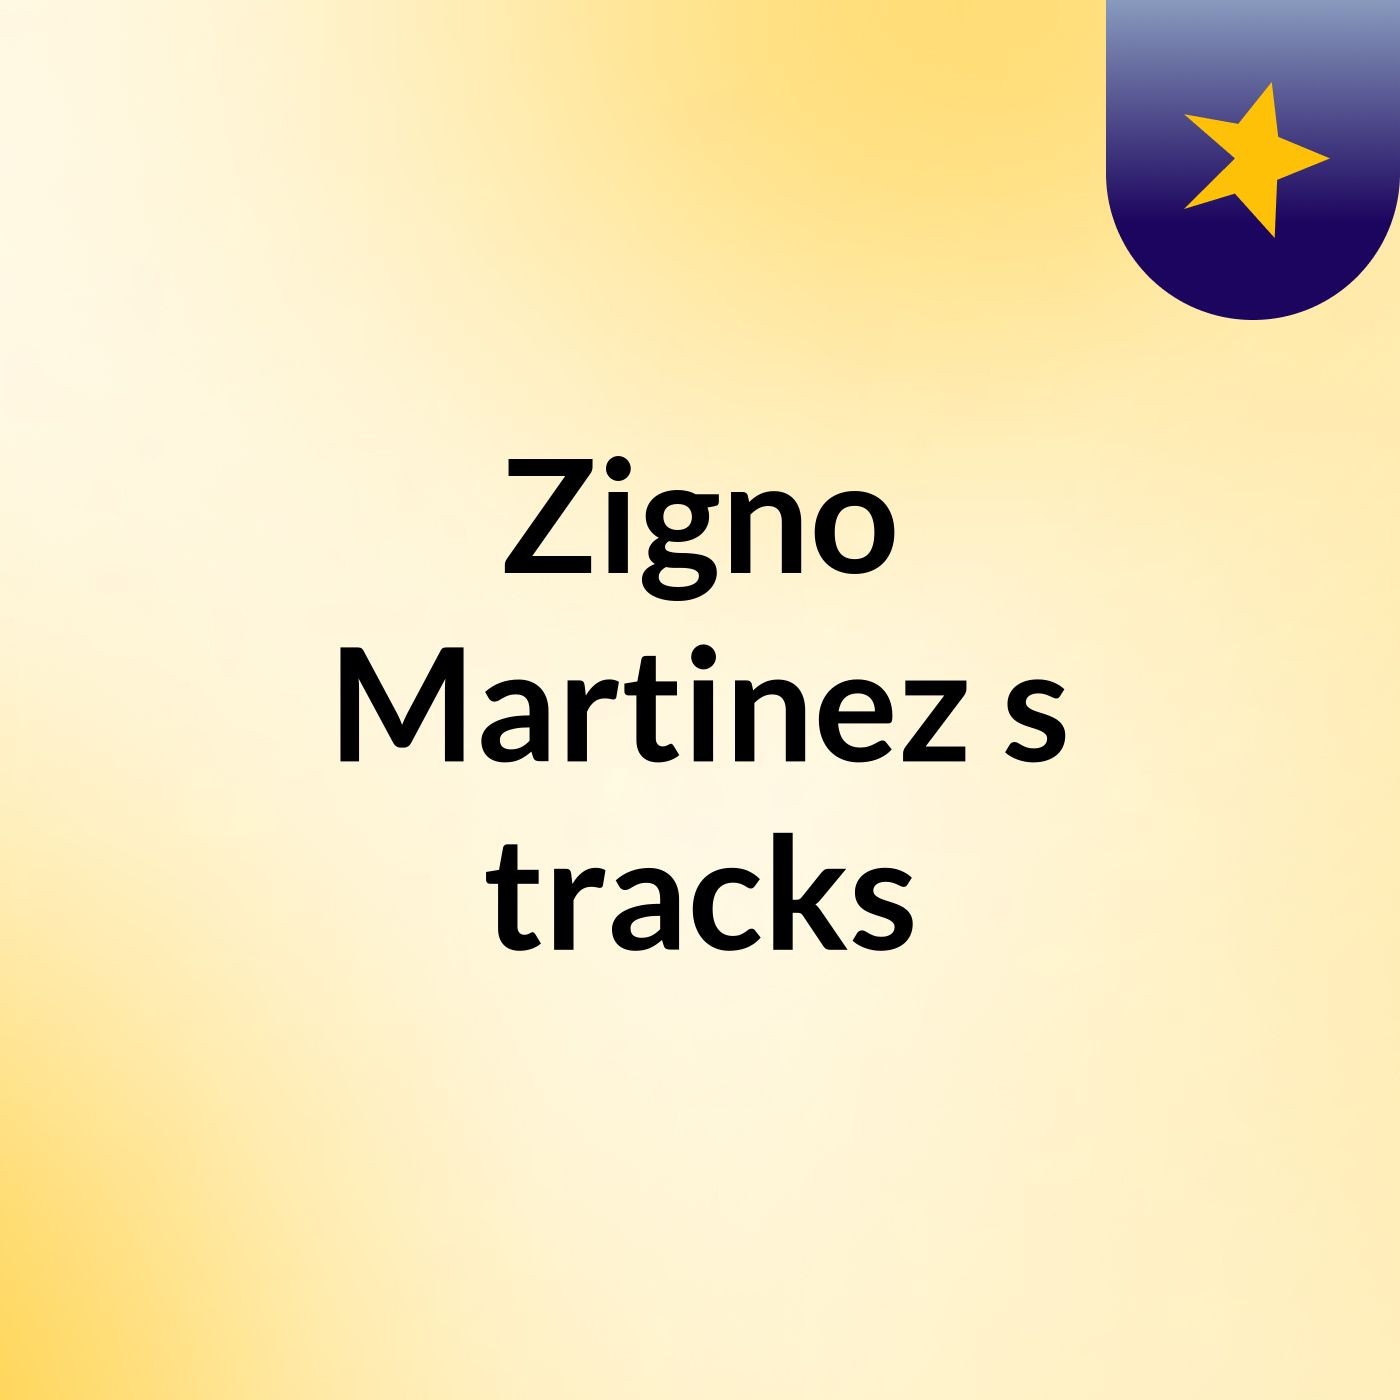 Zigno Martinez's tracks